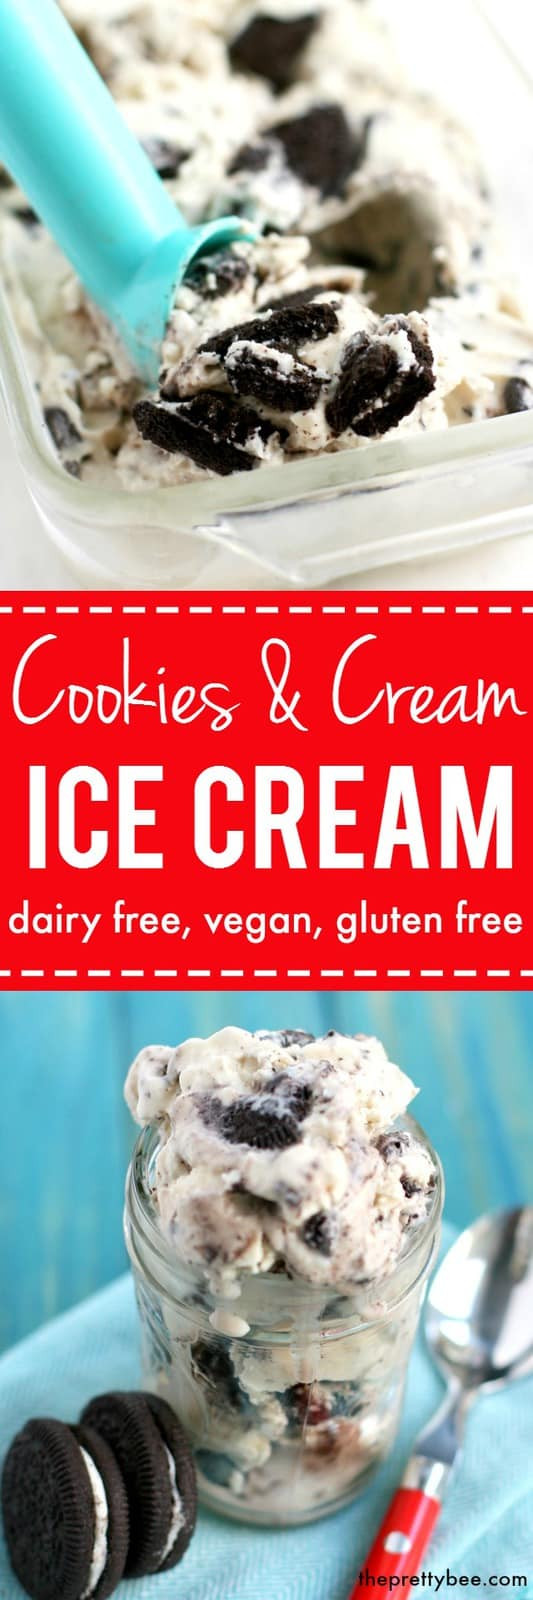 Dairy Free Ice Cream Recipes
 Dairy Free Cookies and Cream Ice Cream The Pretty Bee